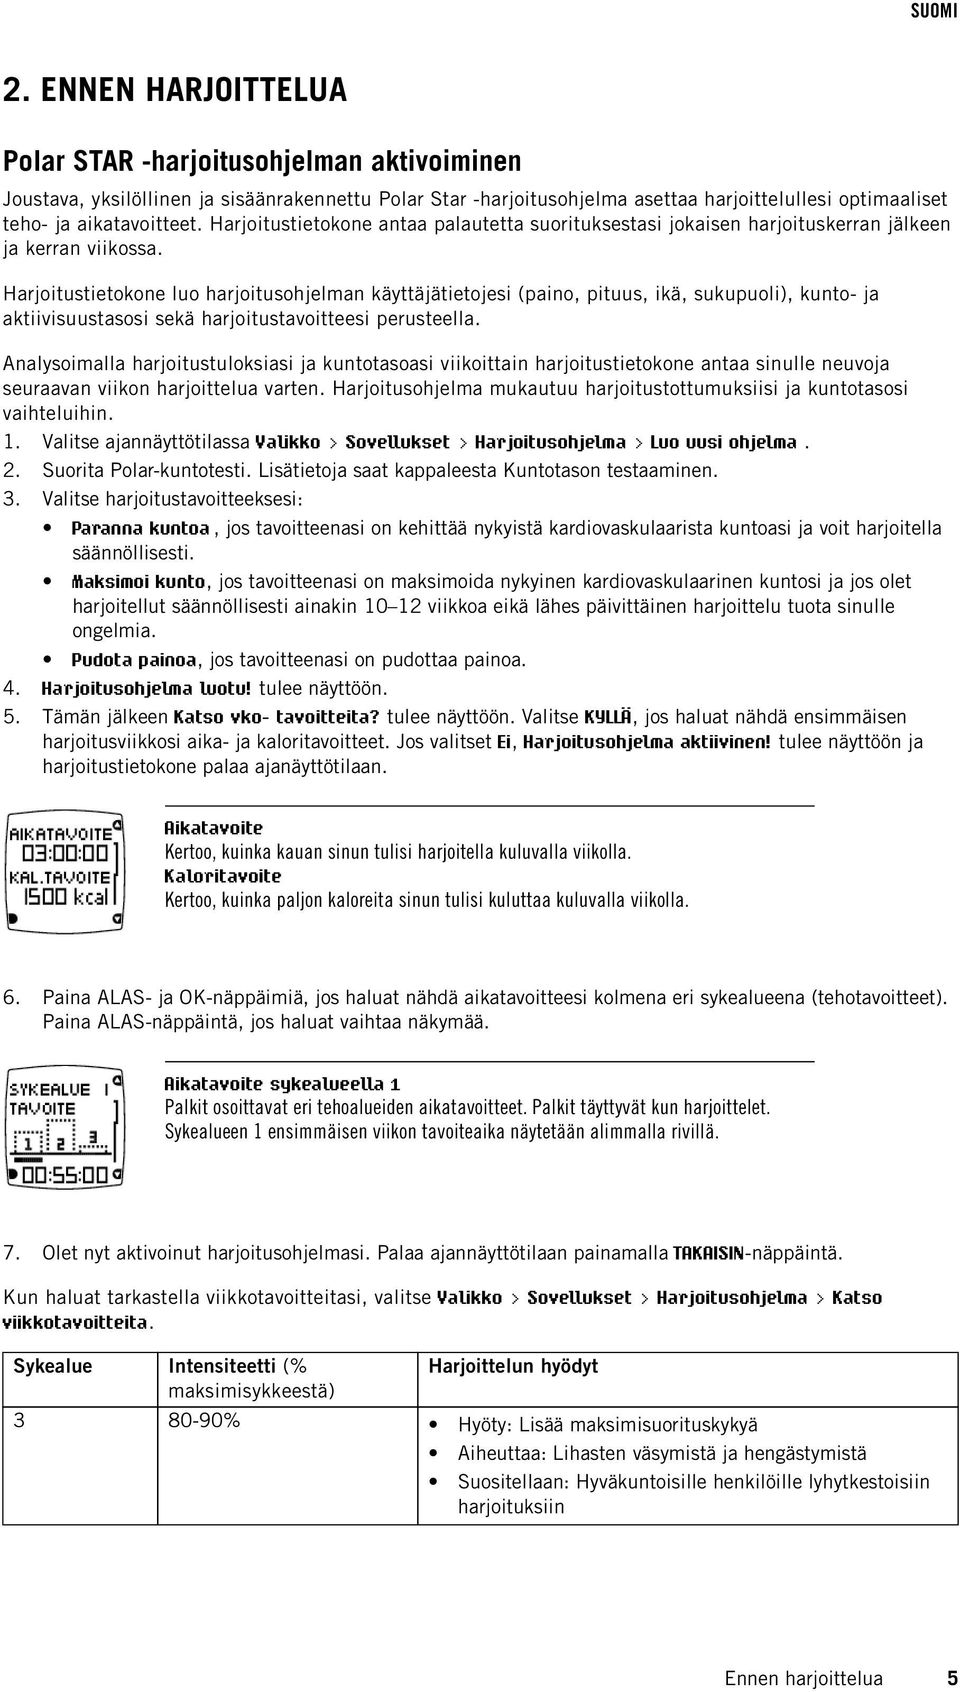 Polar FT60 käyttöohje SUOMI - PDF Free Download